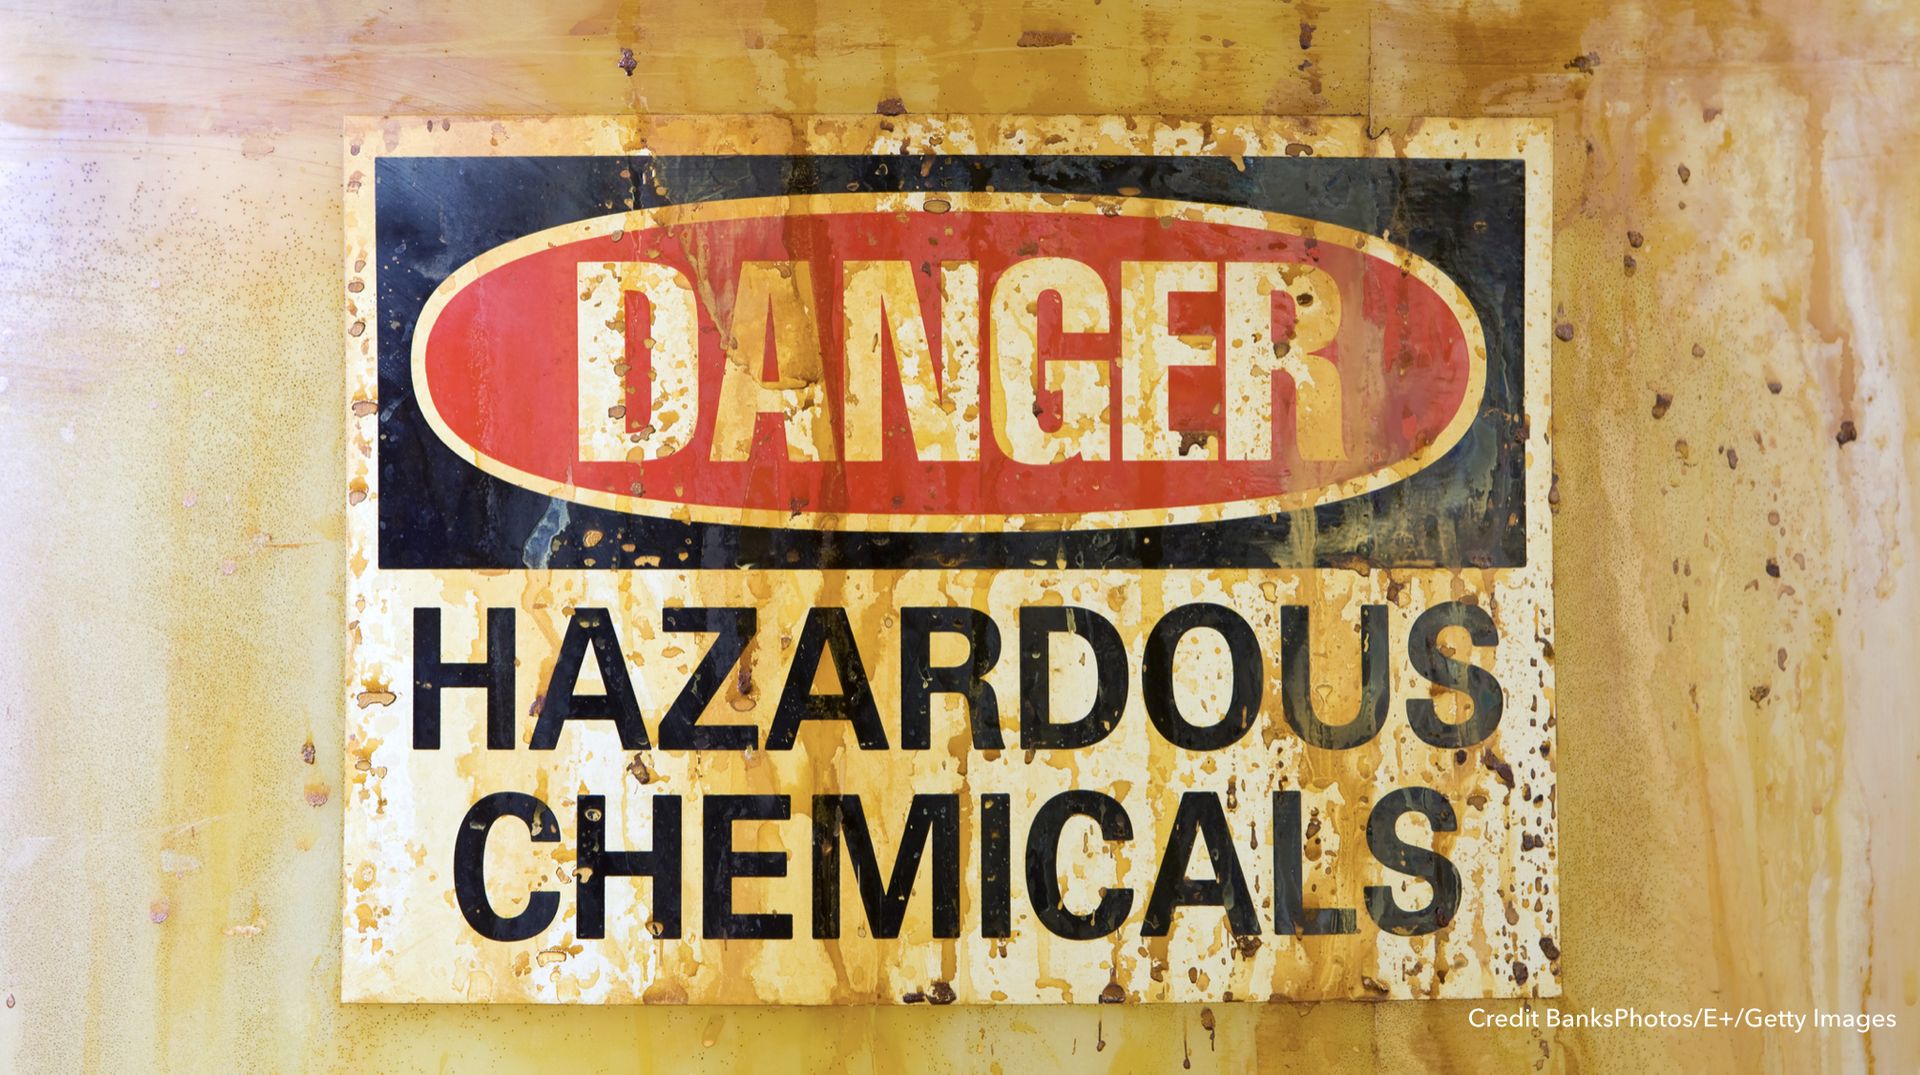 Image: Danger. Hazardous chemicals.